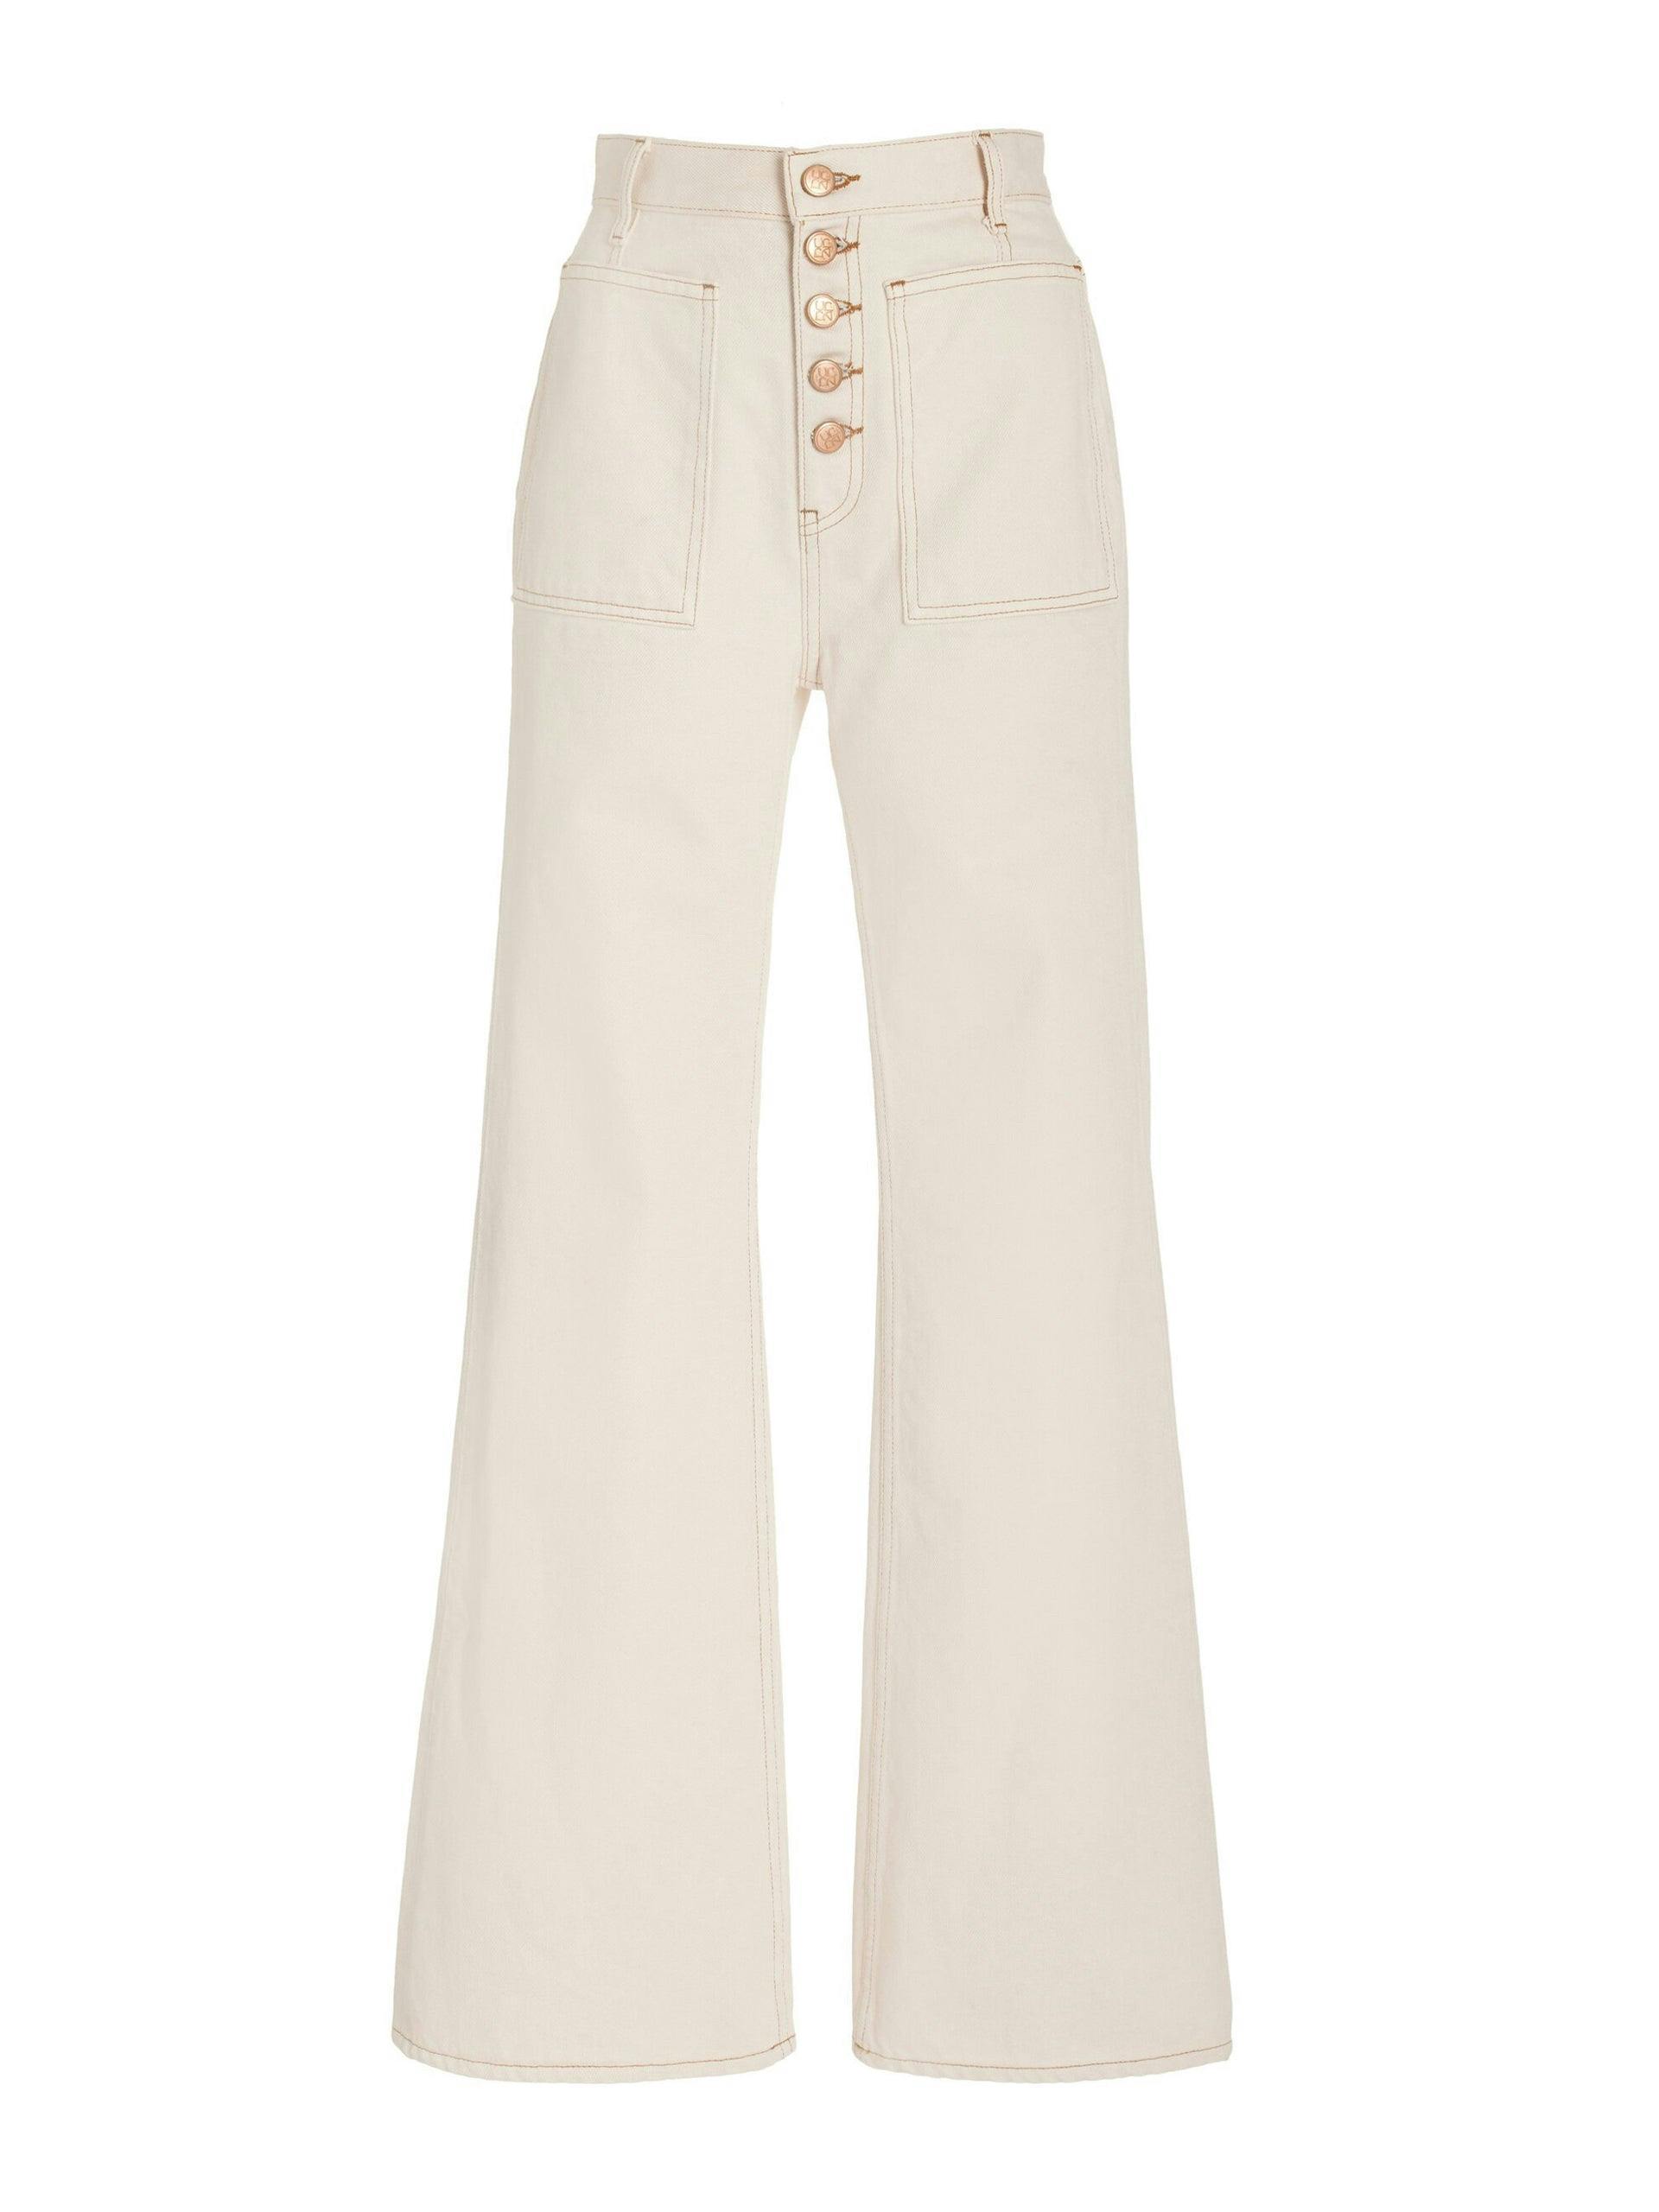 White cotton denim jeans